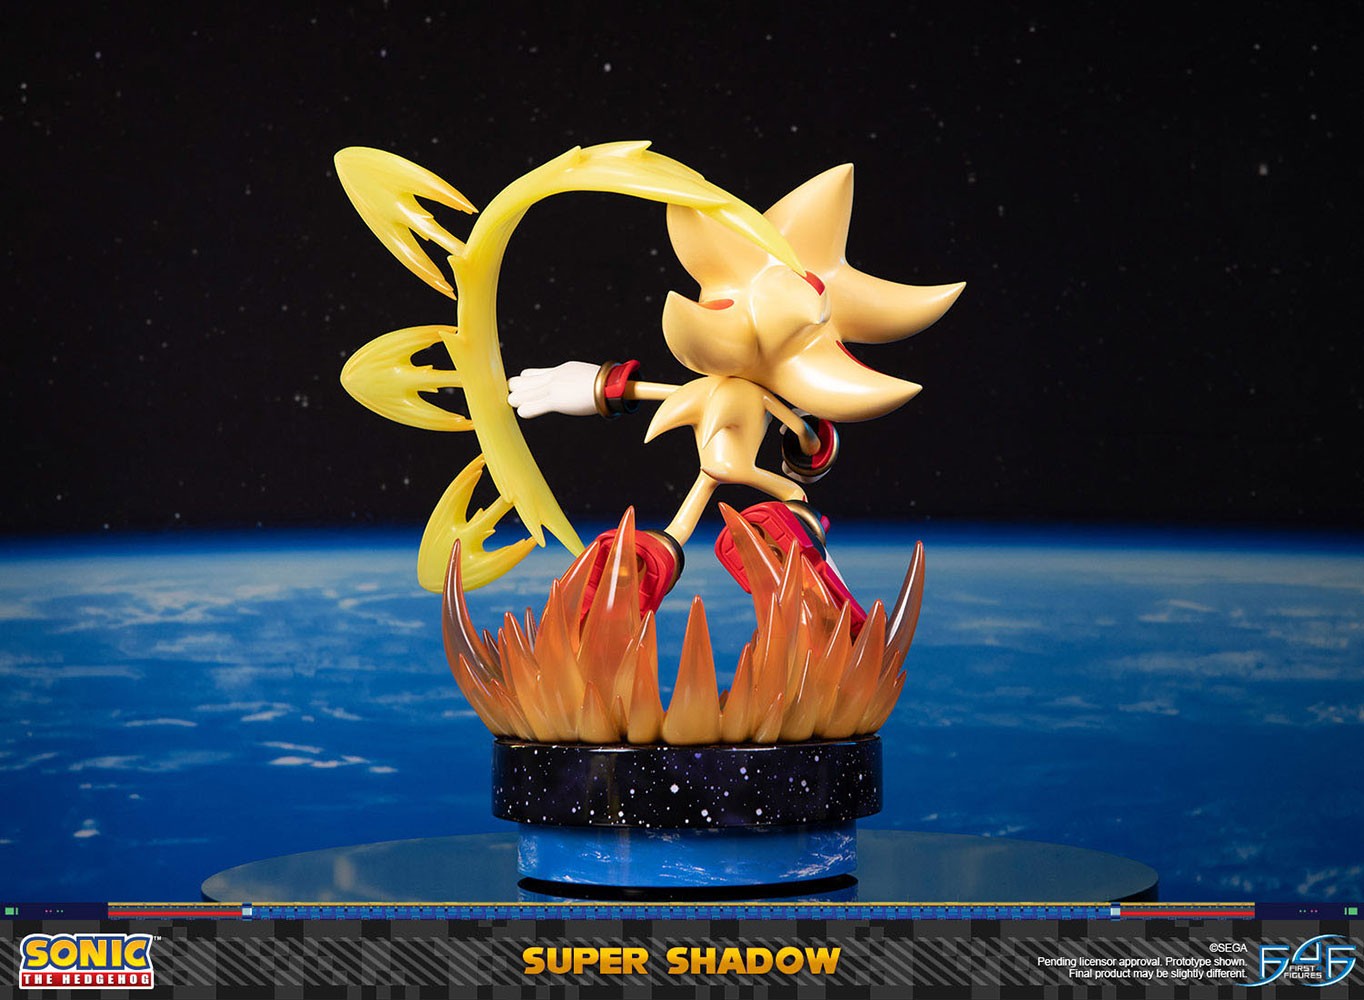 Super Shadow